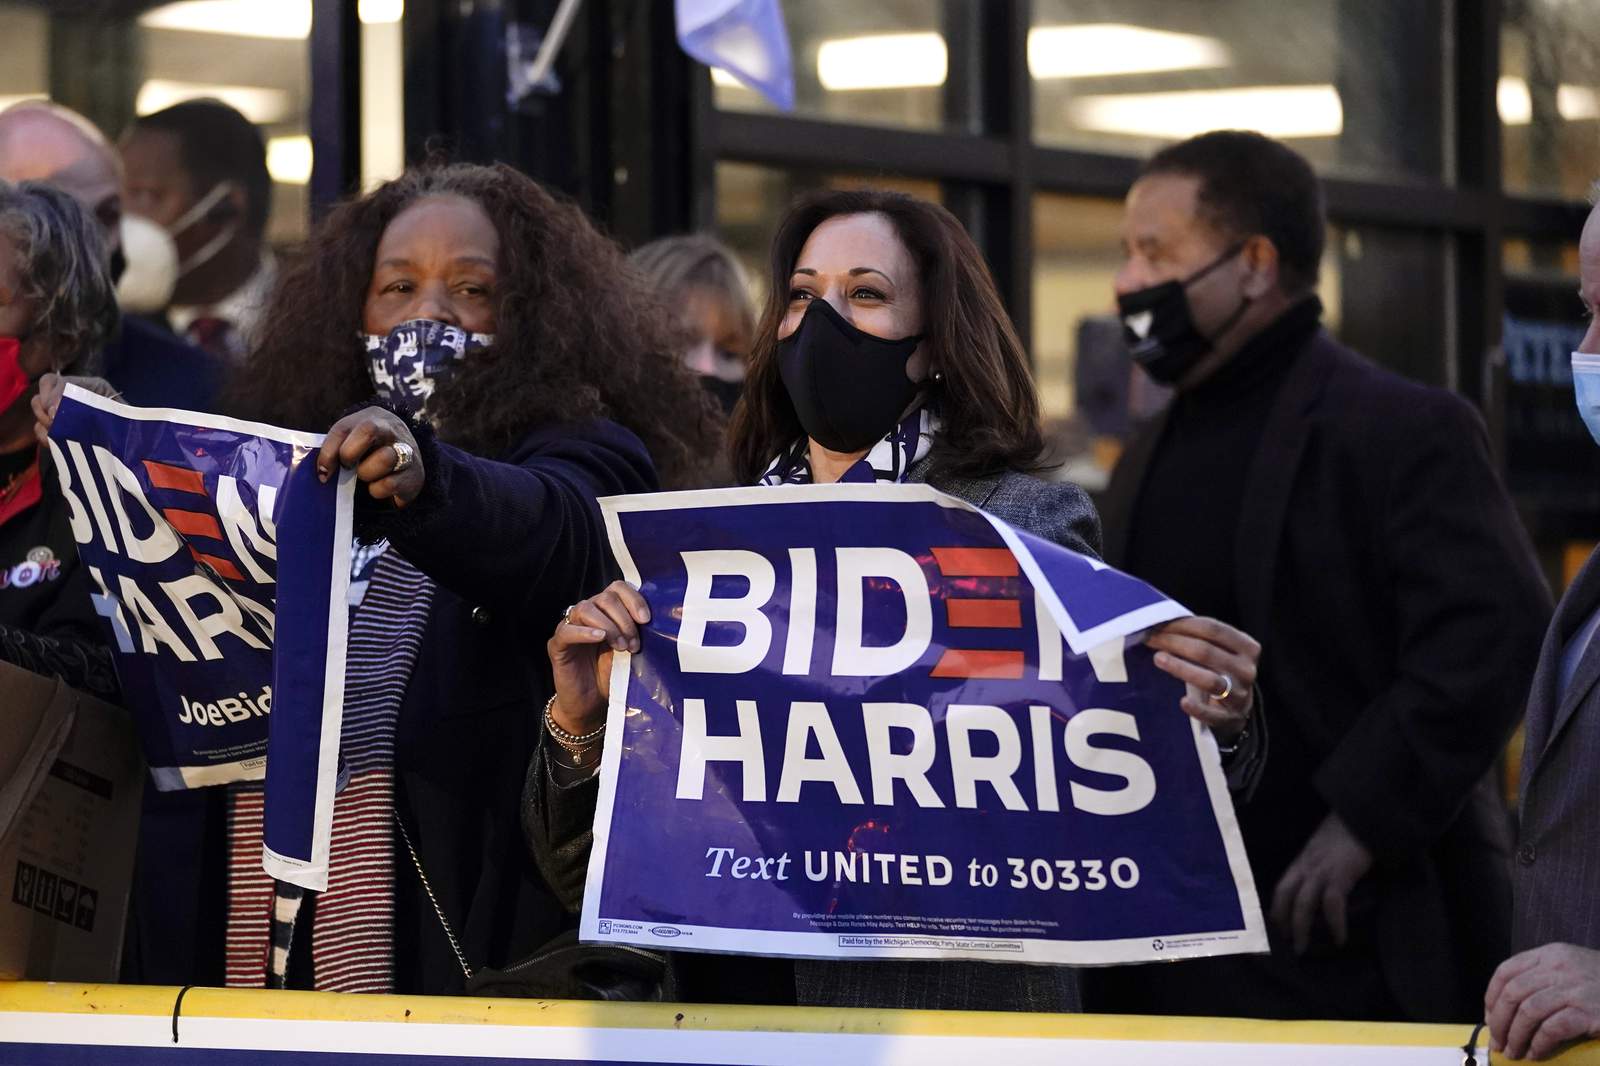 Obama to join Kamala Harris for 2 Democratic fundraisers